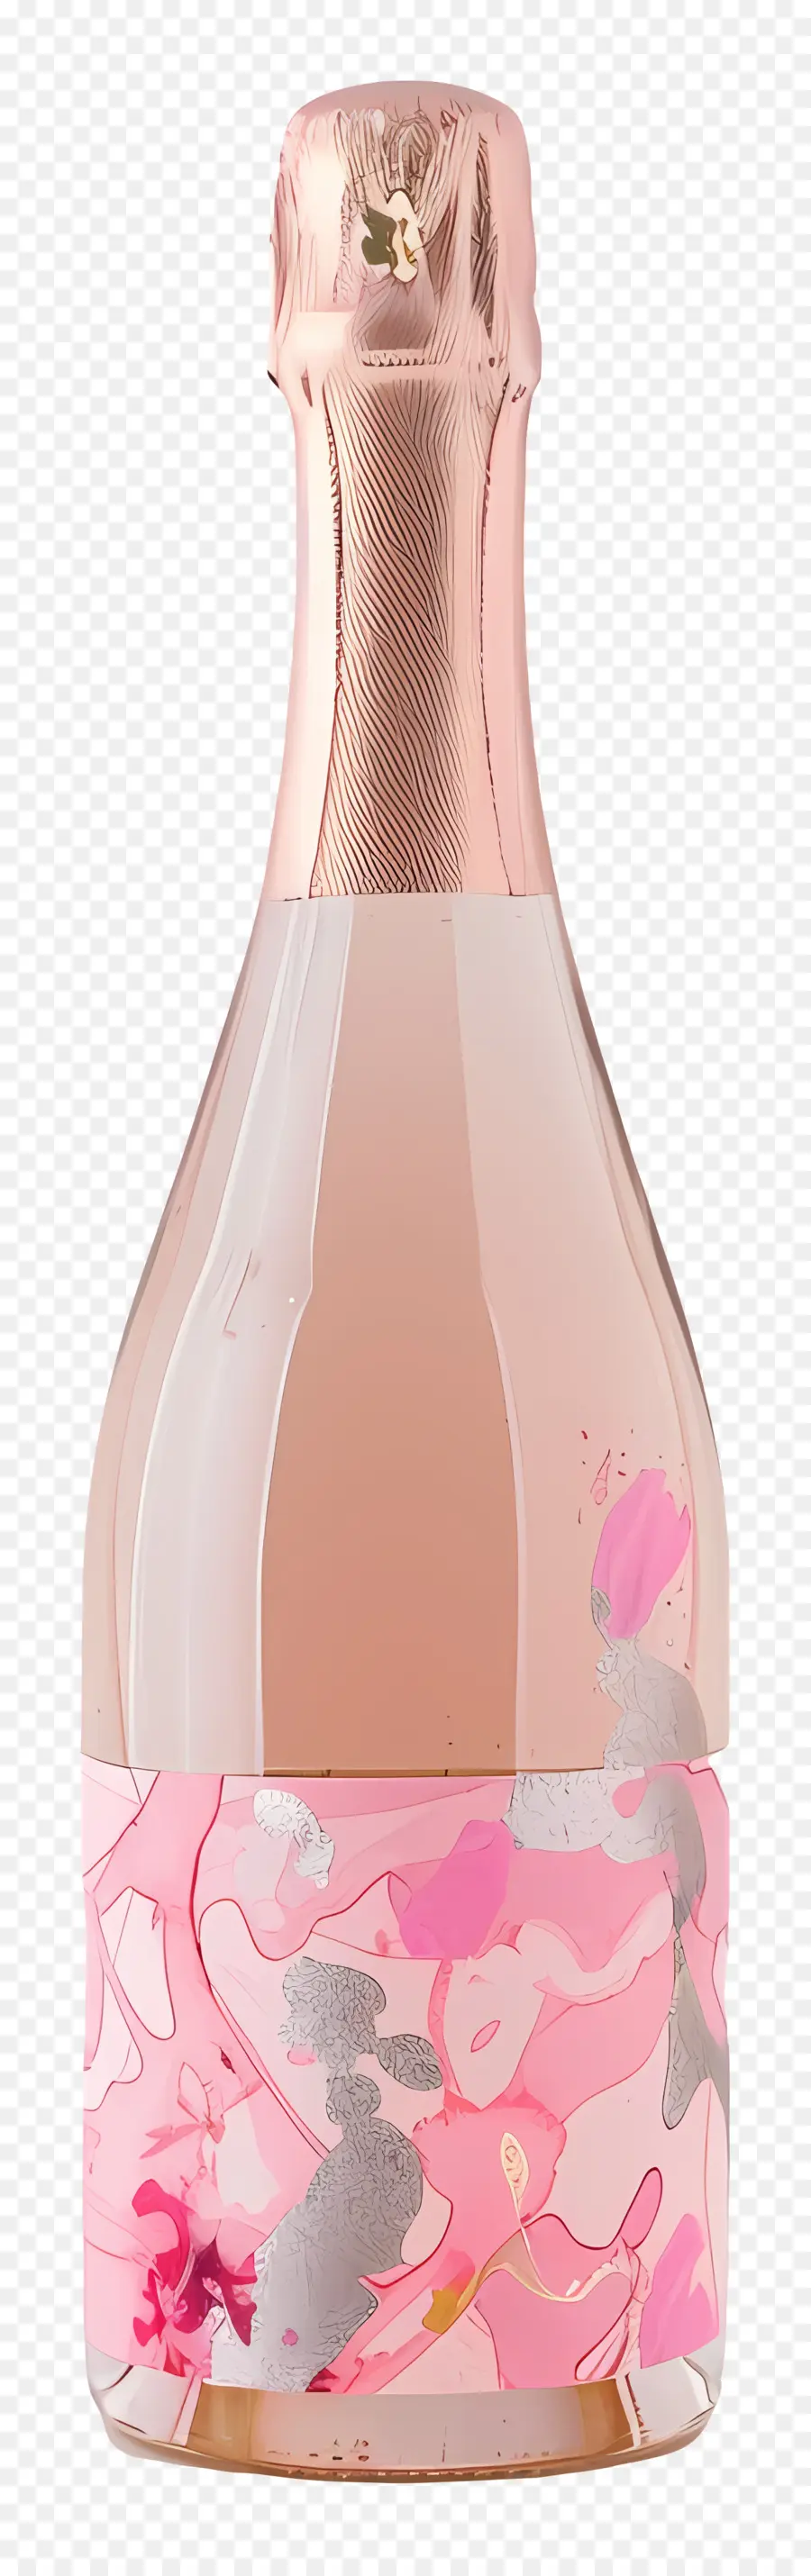 Champaña，Vino De Color Rosa PNG